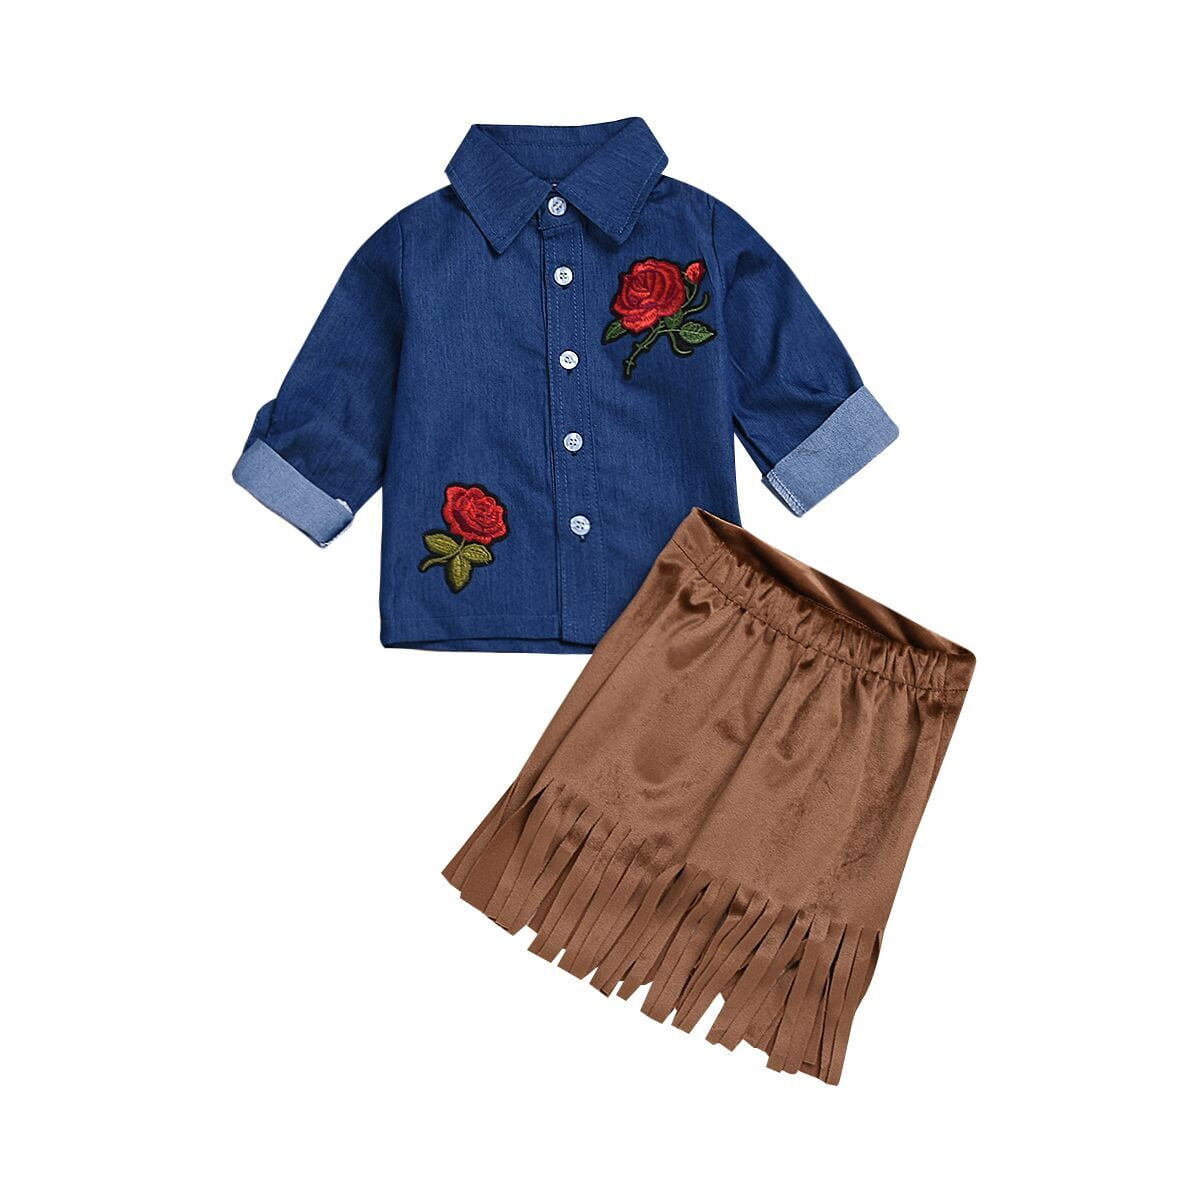 Tutu Dress Sets Toddler Kids Baby Girls Outfits Floral Clothes Denim Shirt Tops 